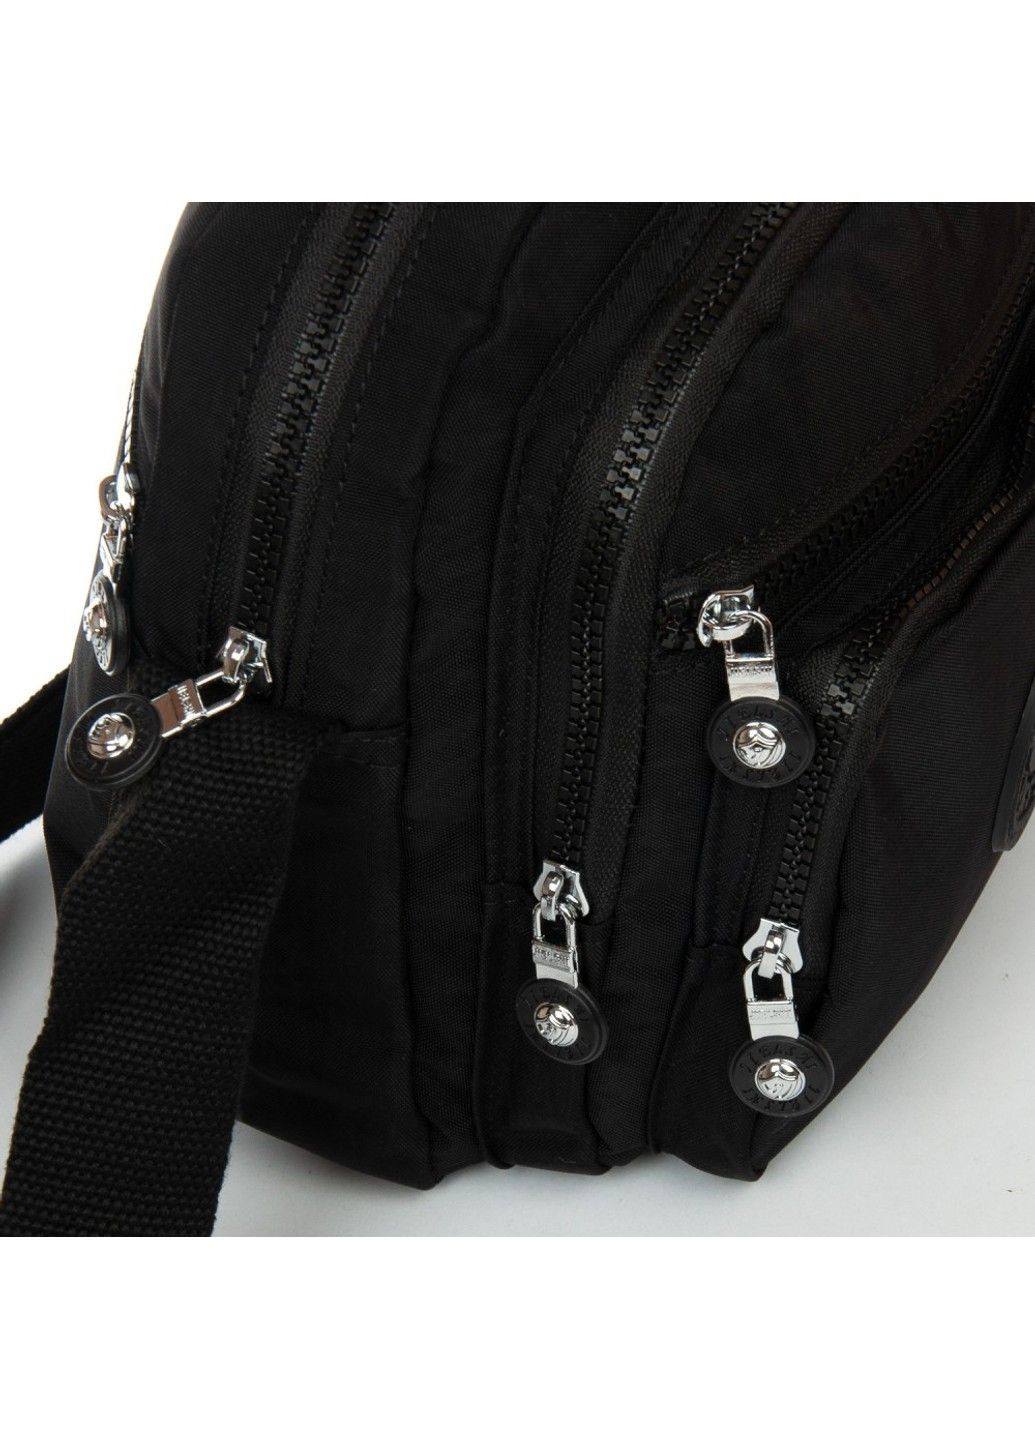 Женская летняя тканевая сумка M008 black Jielshi (293765326)